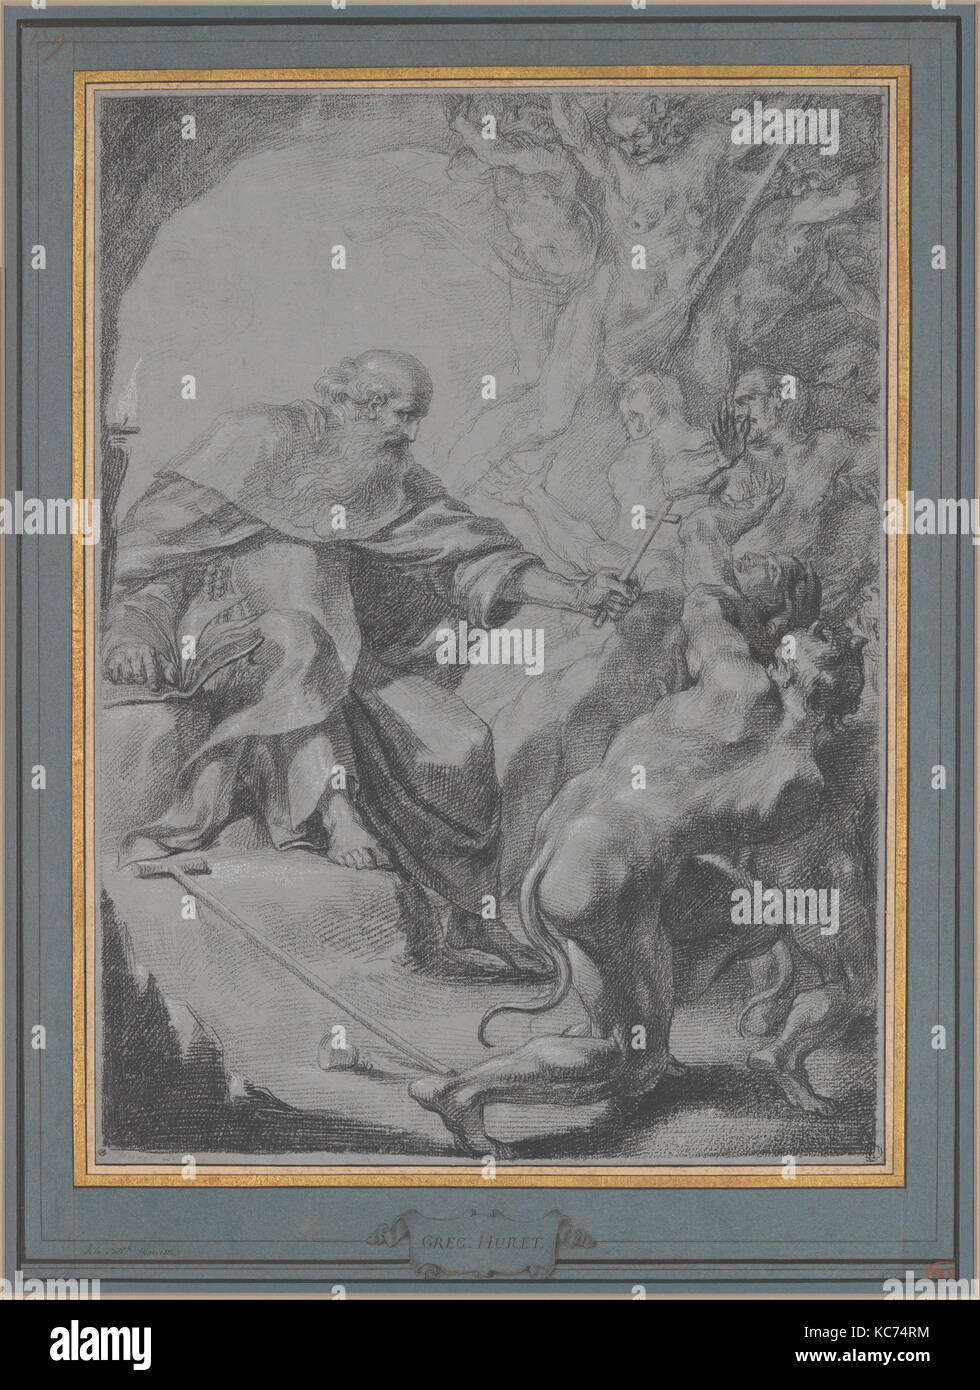 St. Anthony of Egypt Driving Away Devils, Grégoire Huret, 17th century Stock Photo